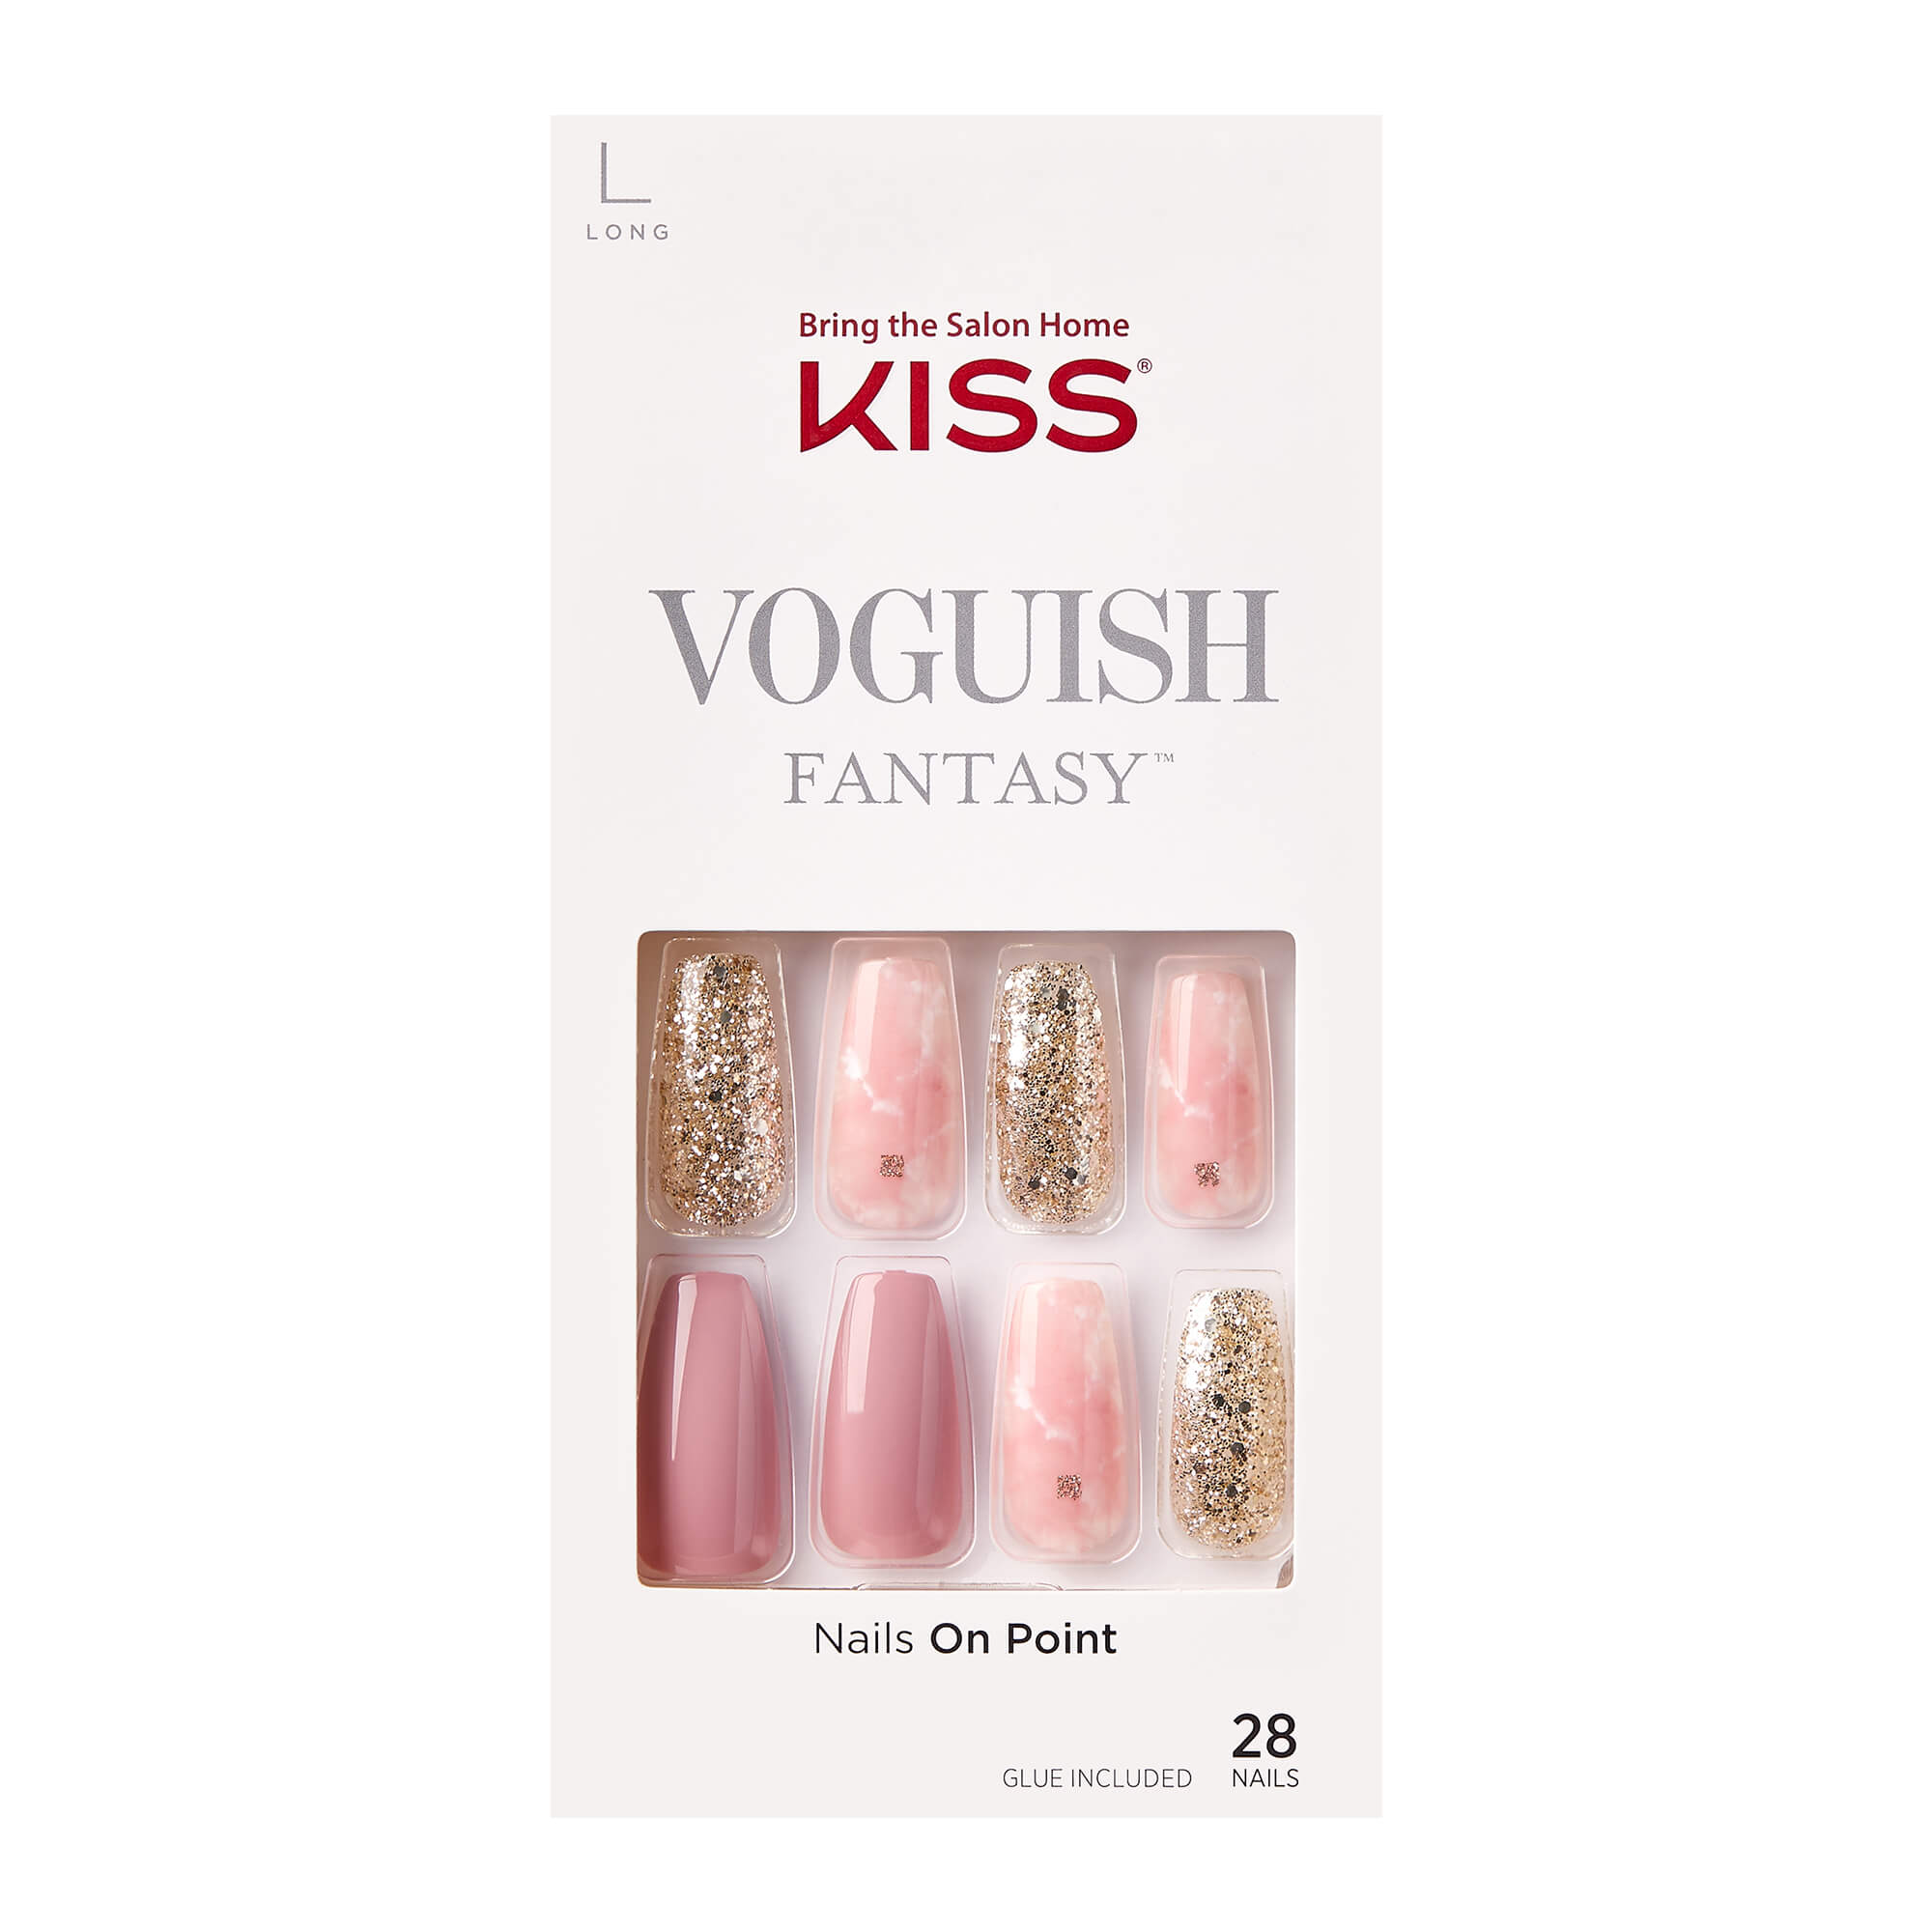 KISS Voguish Fantasy Nails | Pick Up In Store TODAY at CVS